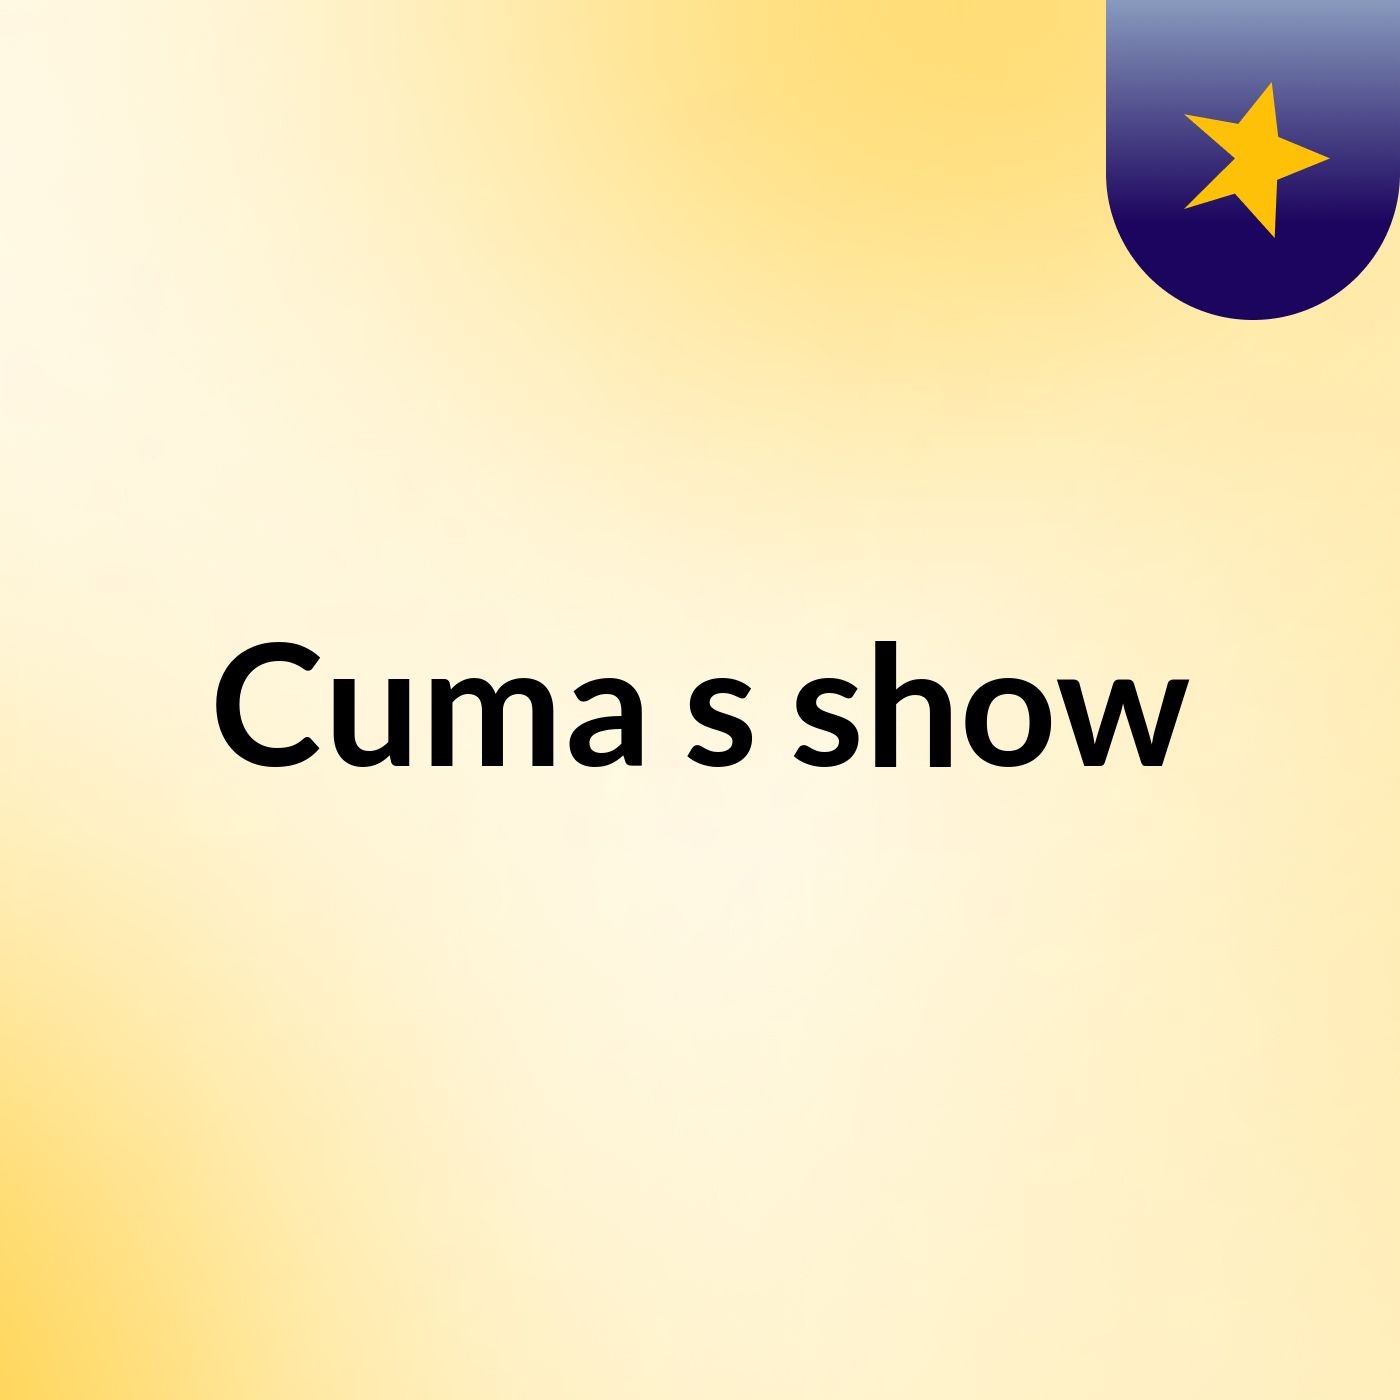 Cuma's show